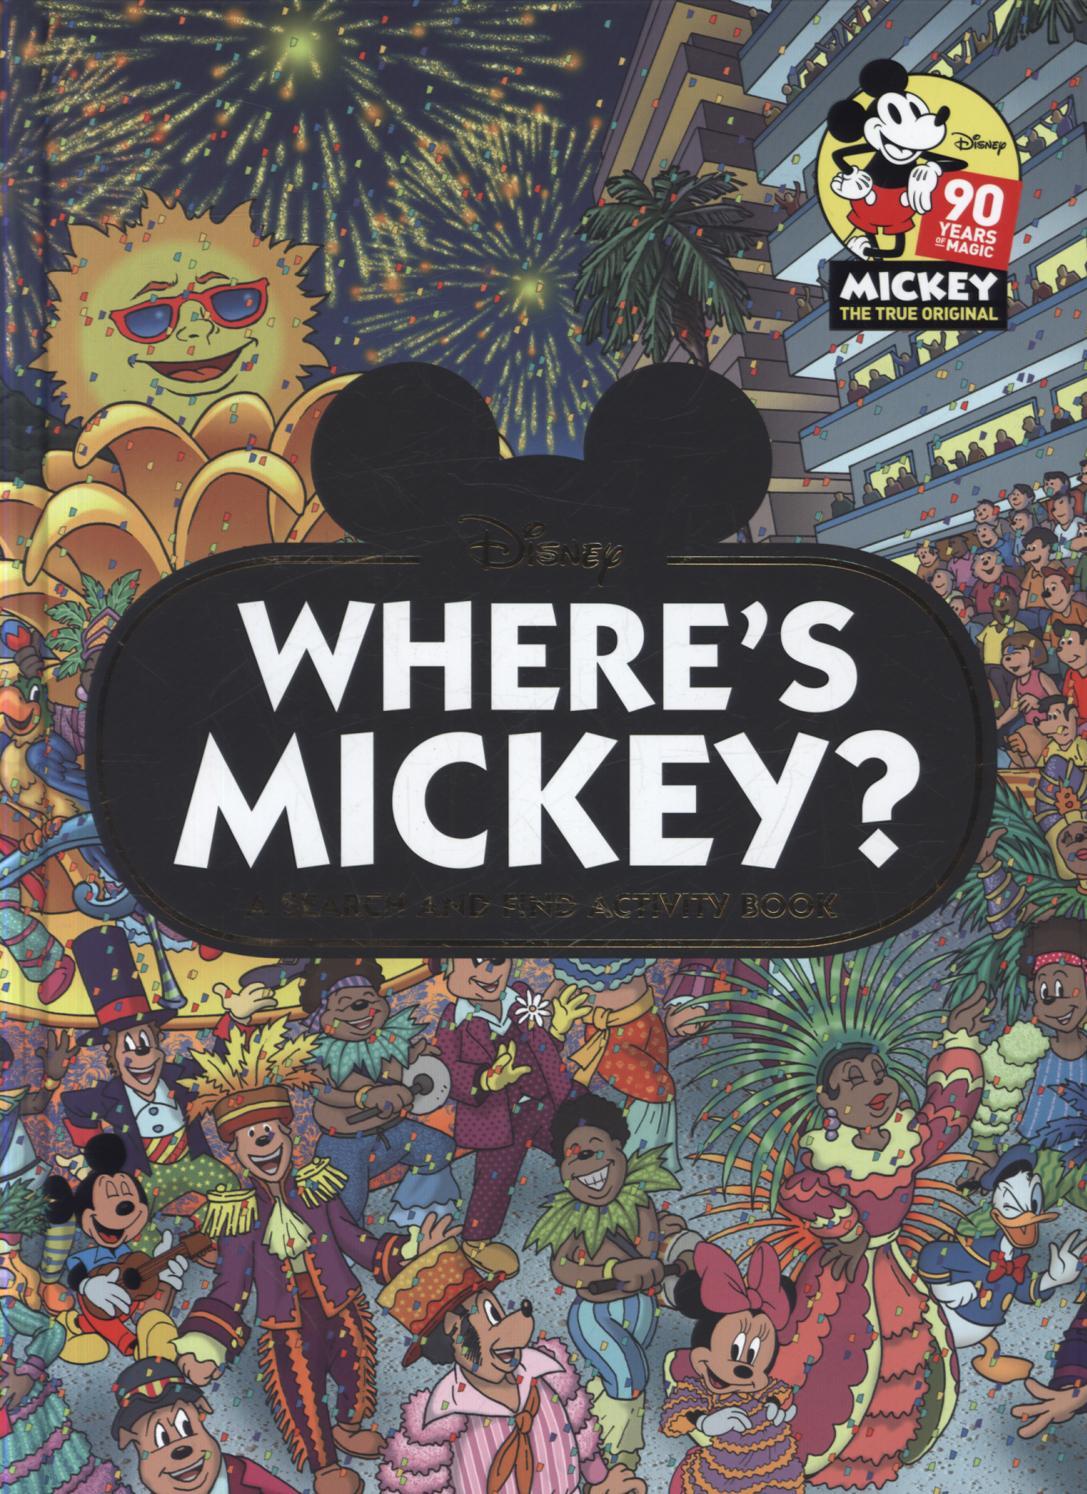 Where's Mickey?